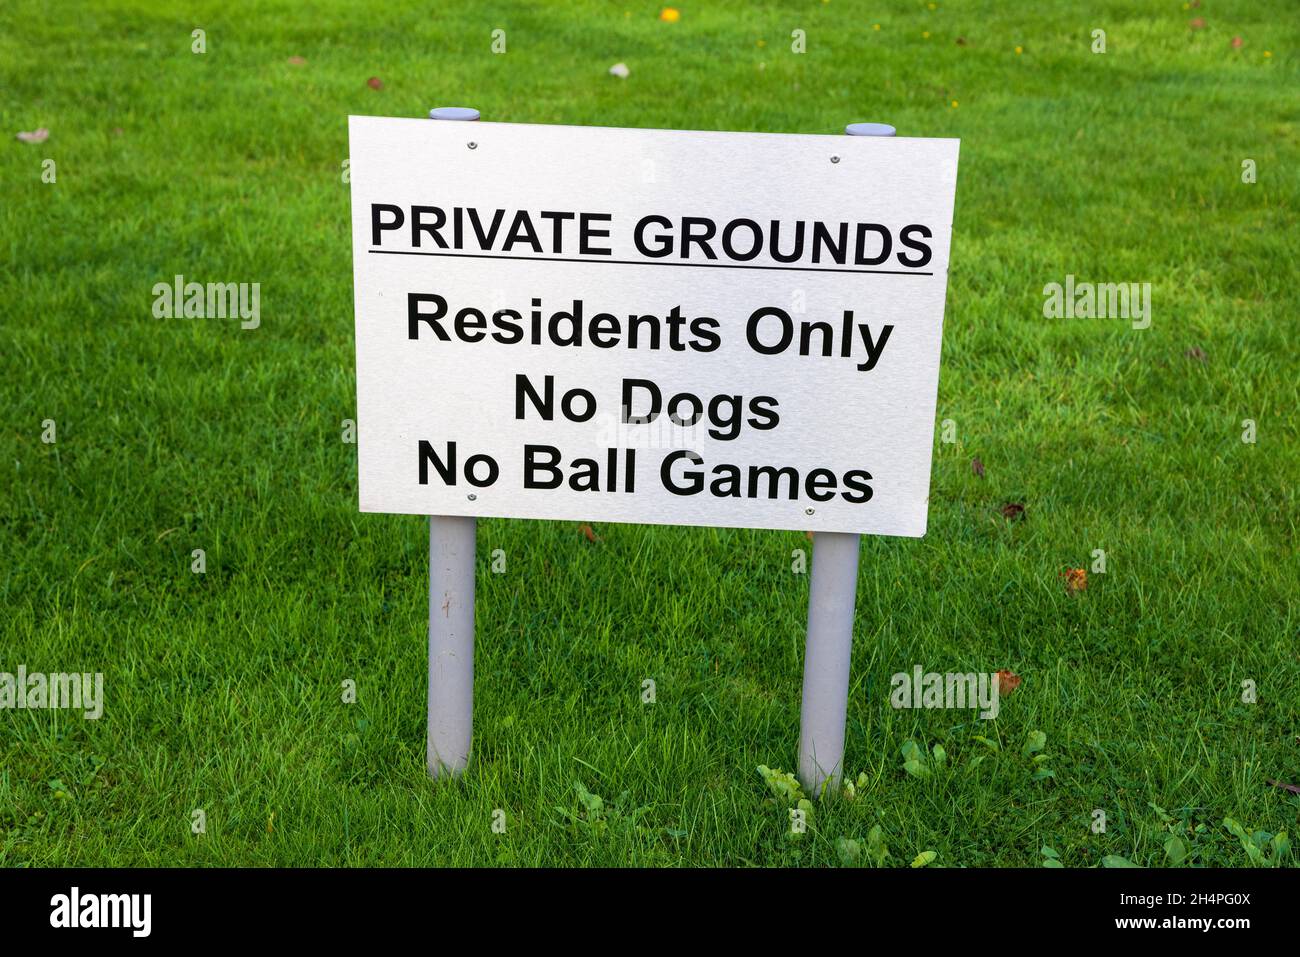 A prohibition sign banning ball games on an upmarket housing development. Stock Photo